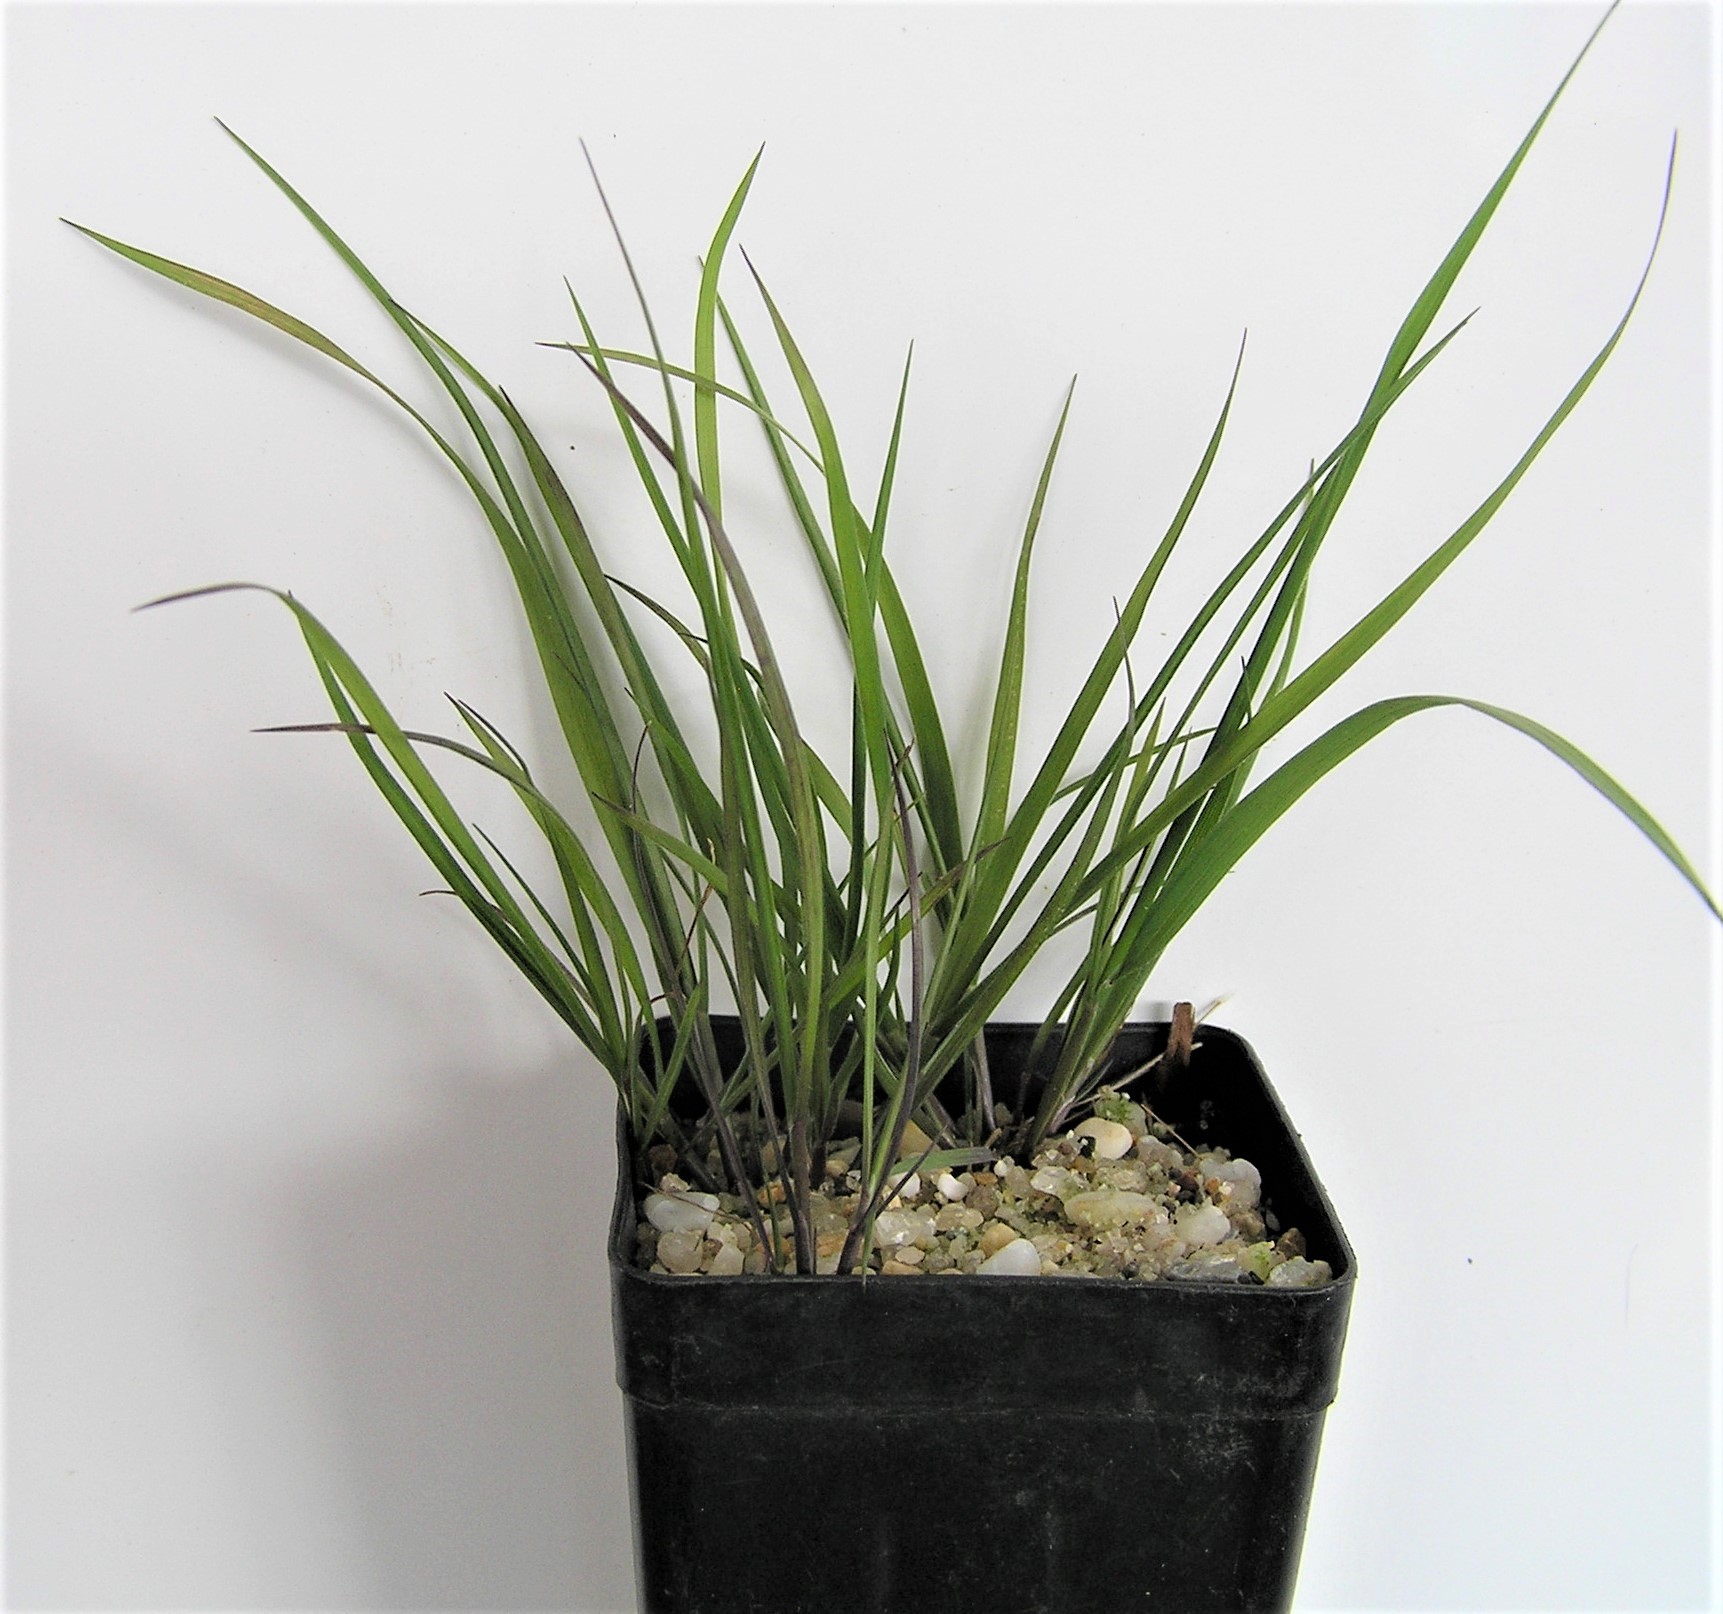 Astrostipa elegantissima (Feather Spear Grass) at 2 months